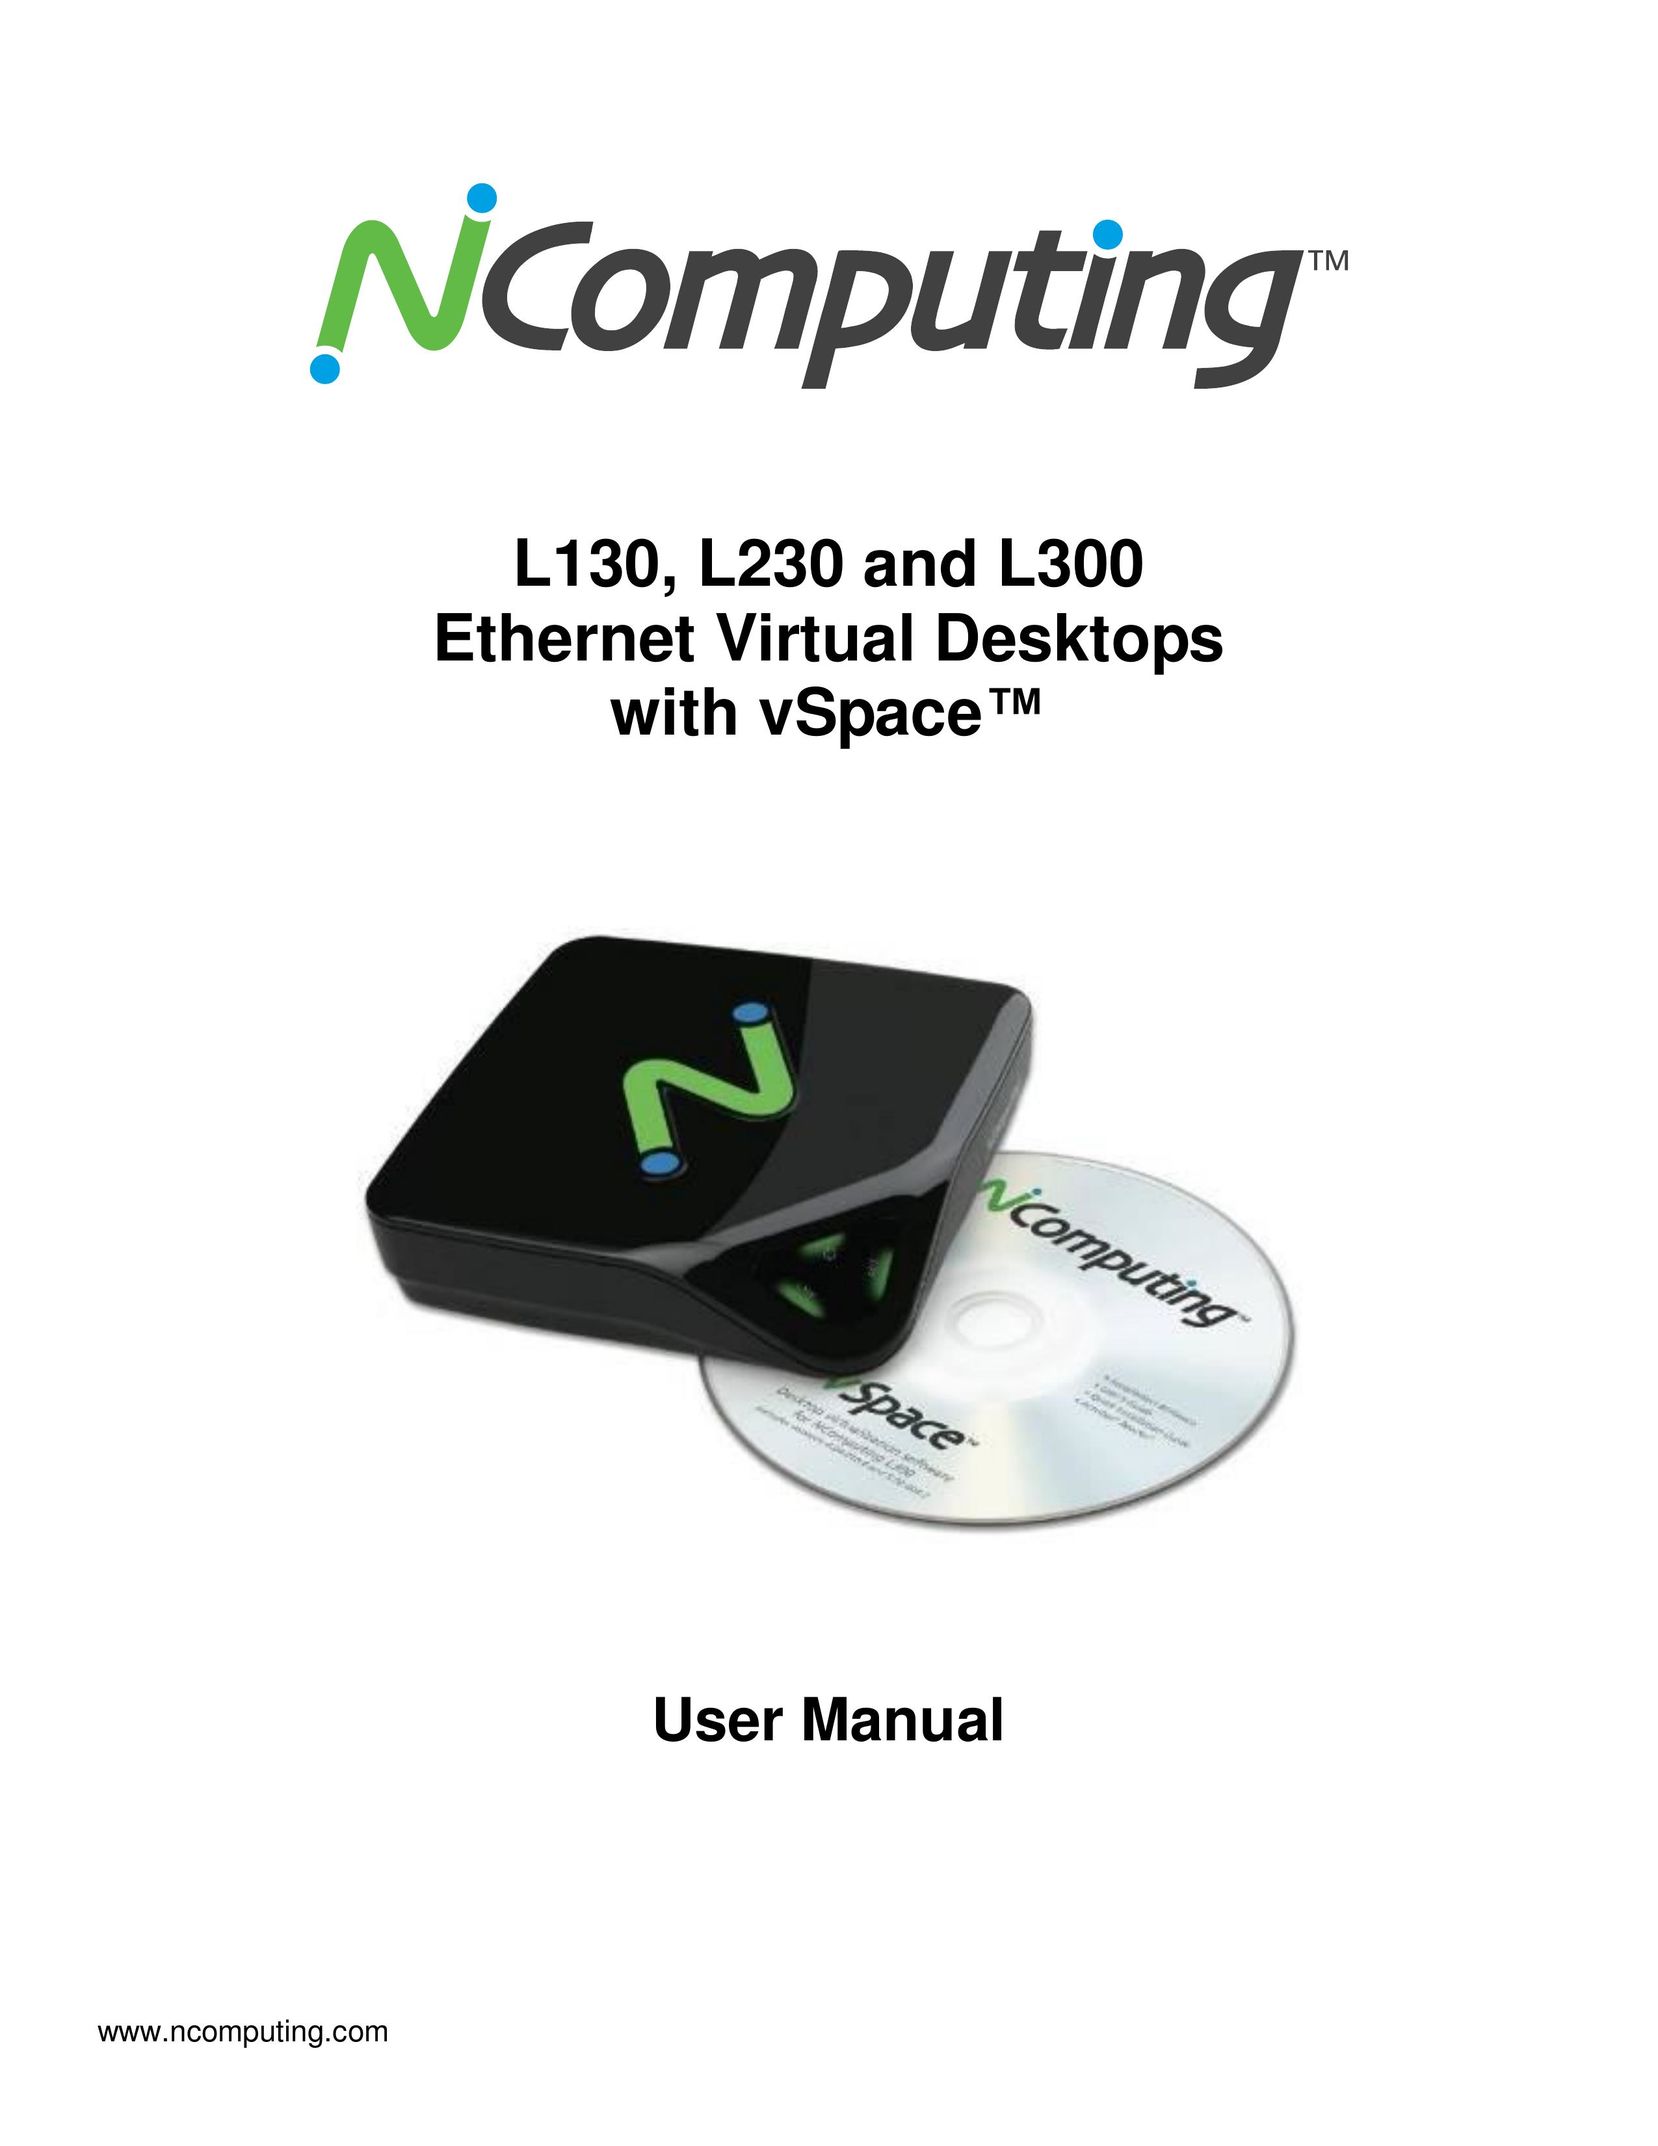 NComputing L130 Laminator User Manual